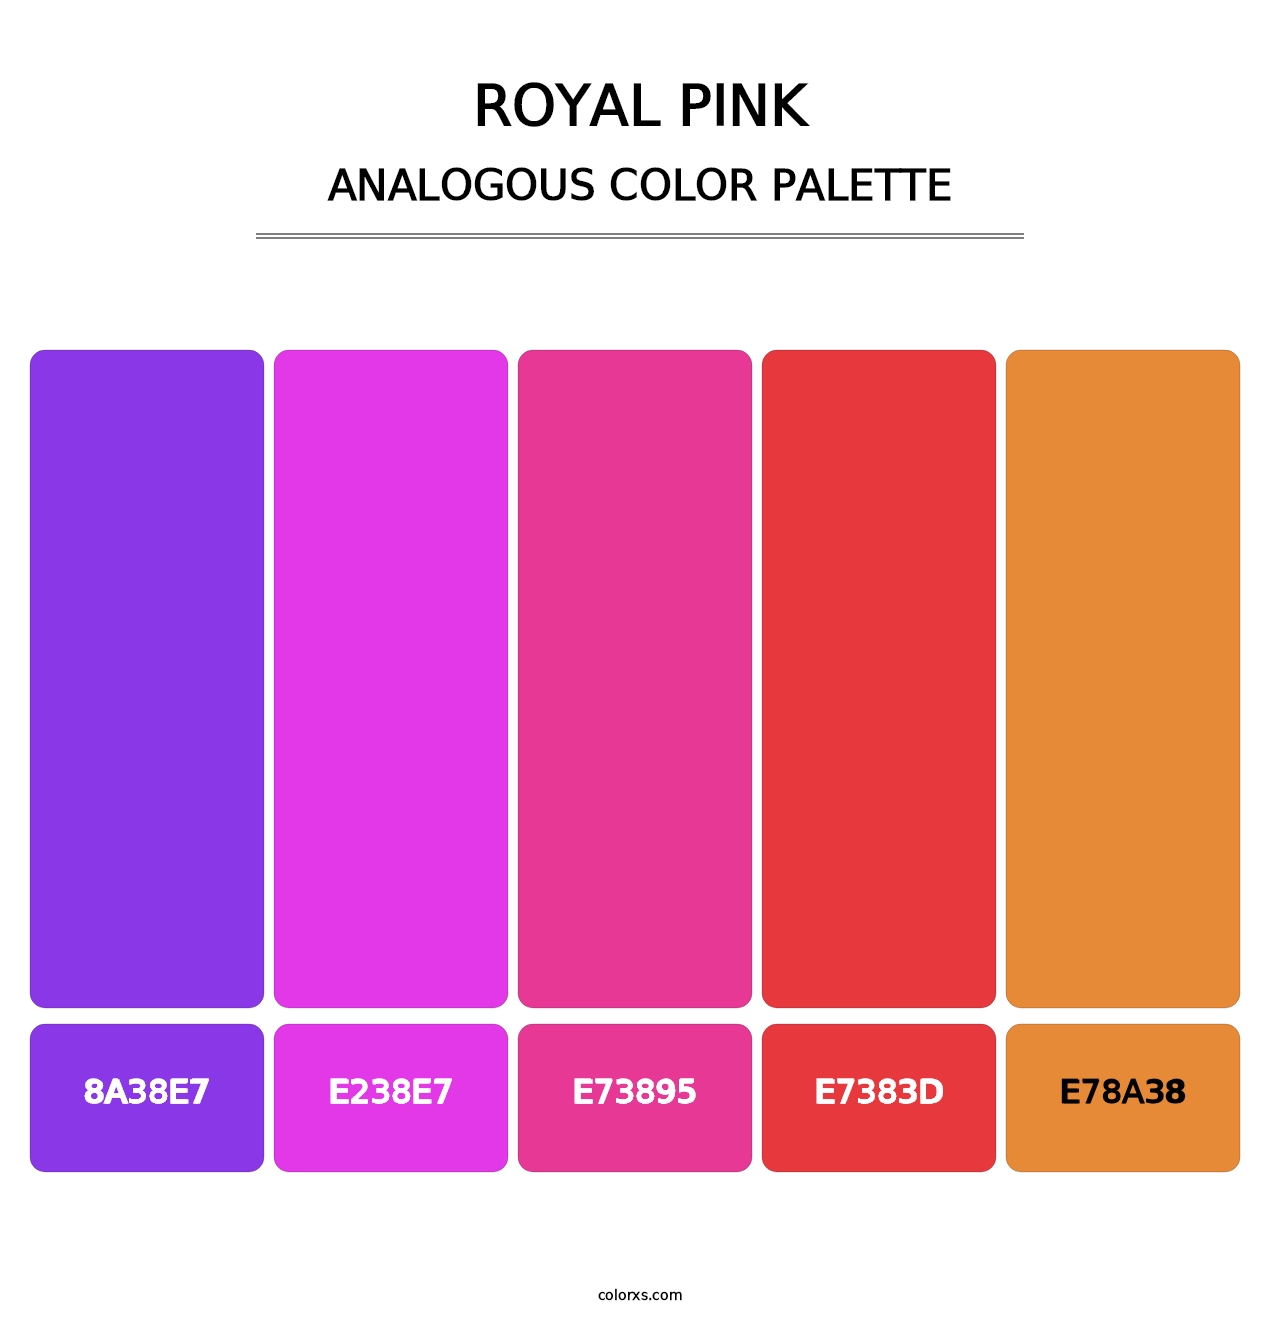 Royal Pink - Analogous Color Palette